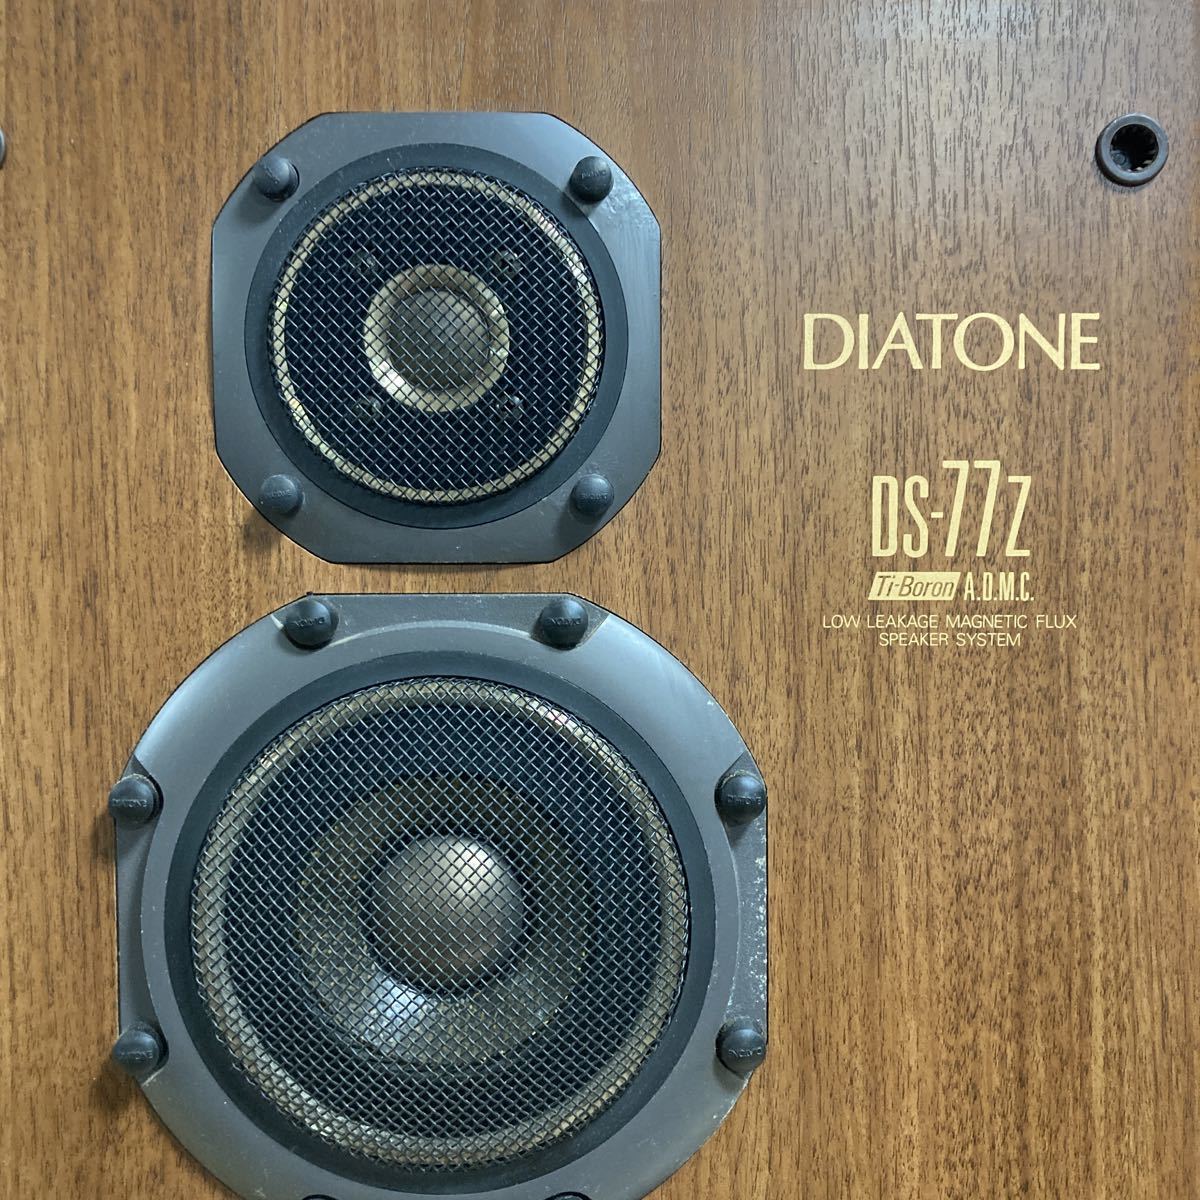 DIATONE ダイヤトーン DS-77Z ブックシェルフ型 3way ペアスピーカー スピーカーシステム 音響 オーディオ機器 音出し確認済み 7 ア 1423_画像4